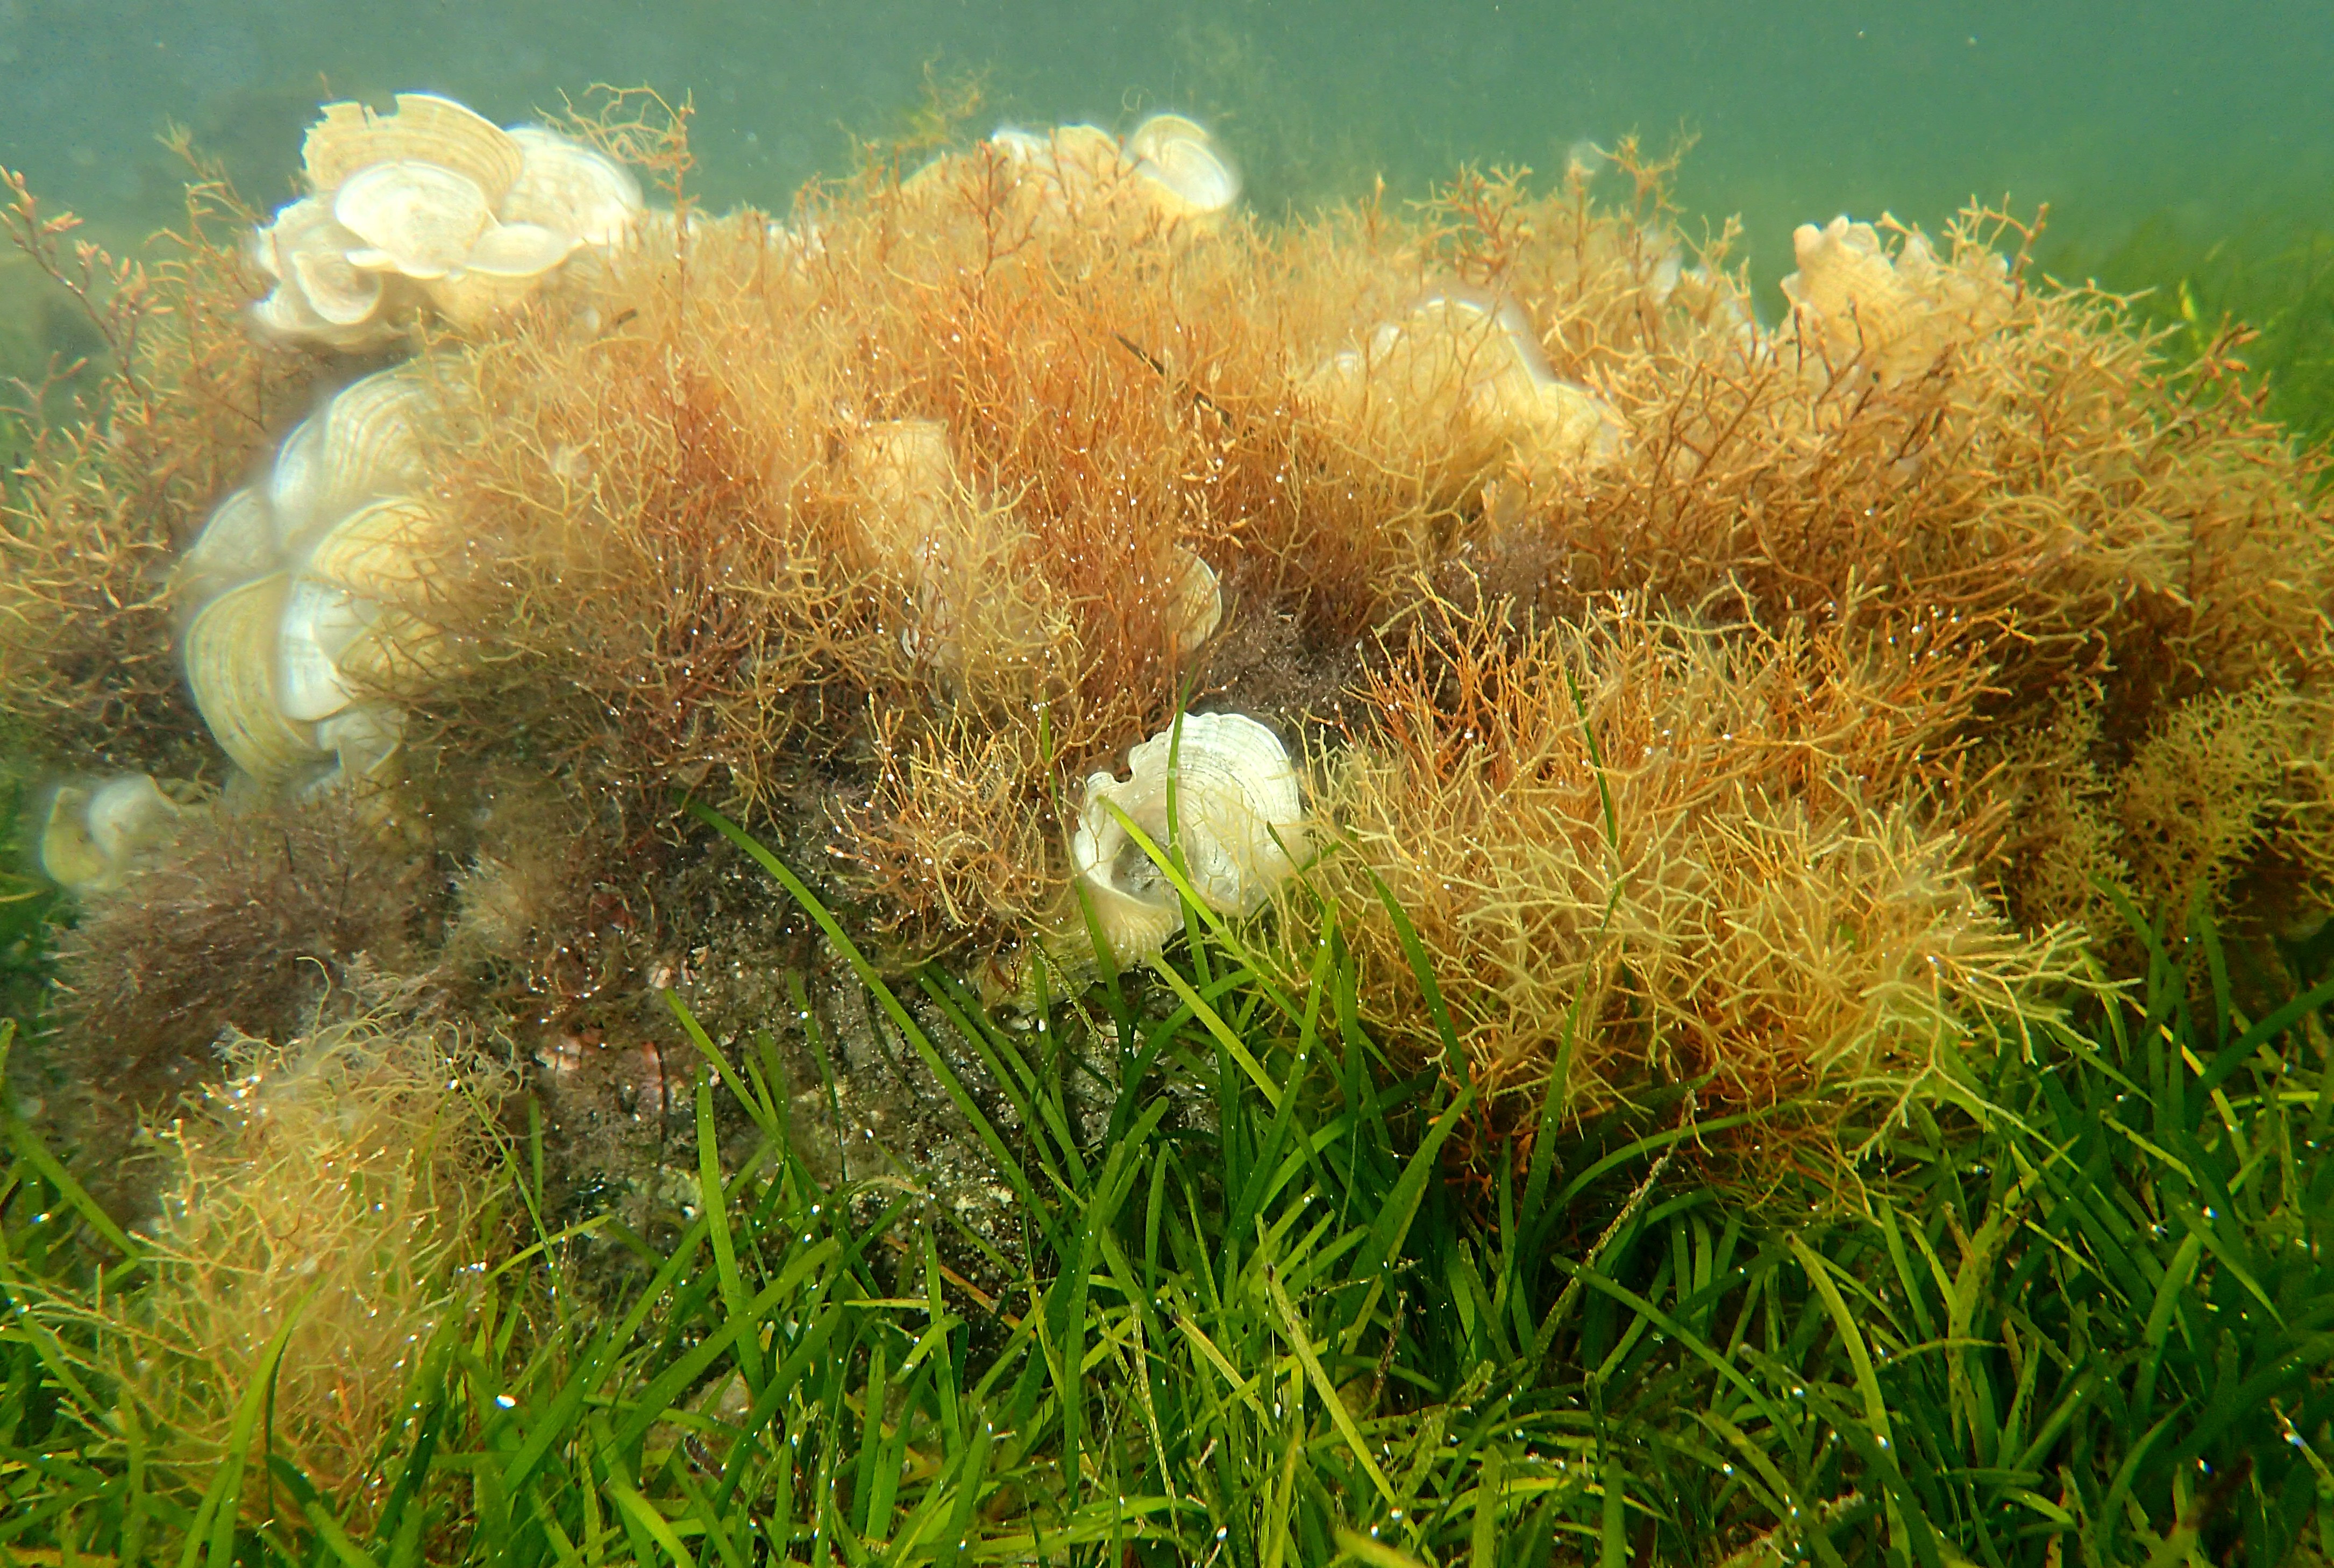 Fondos tapizados por el alga Gorgolaria barbata / Enrique Ballesteros (CEAB-CSIC)